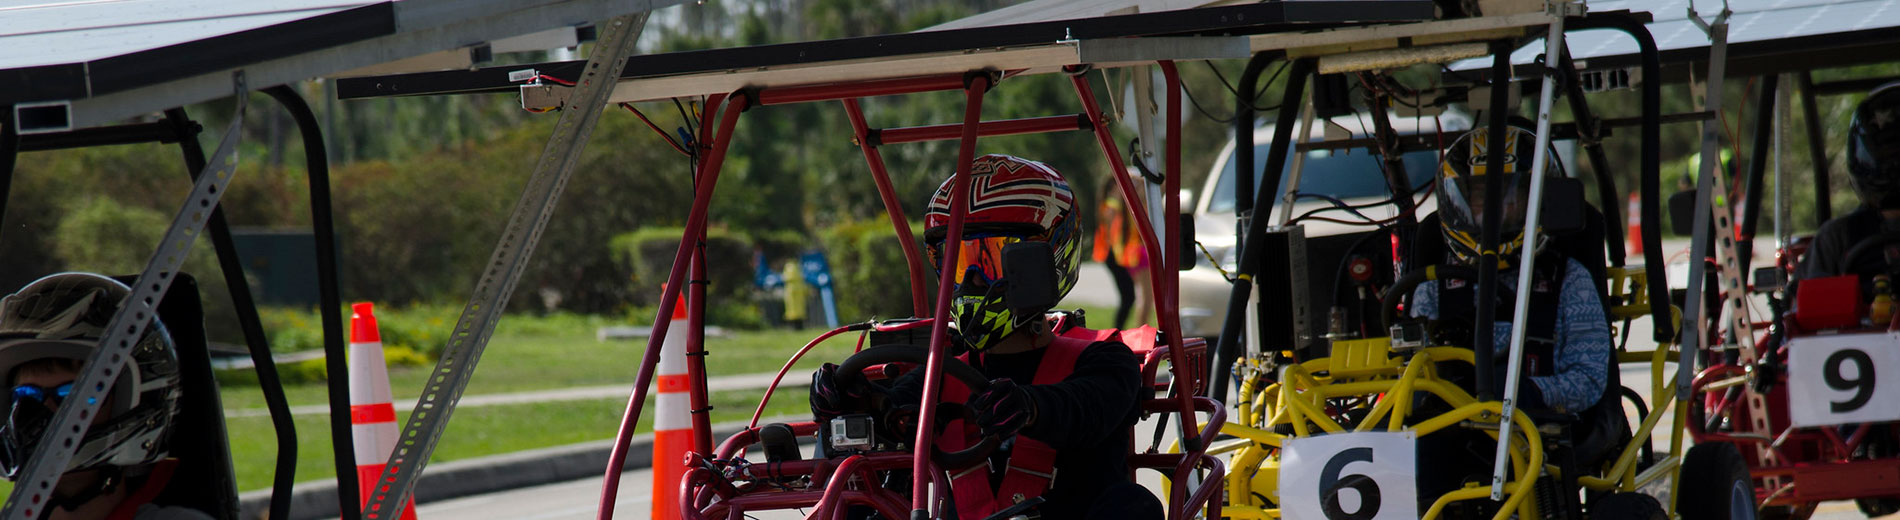 photo shows solar-powered go-karts